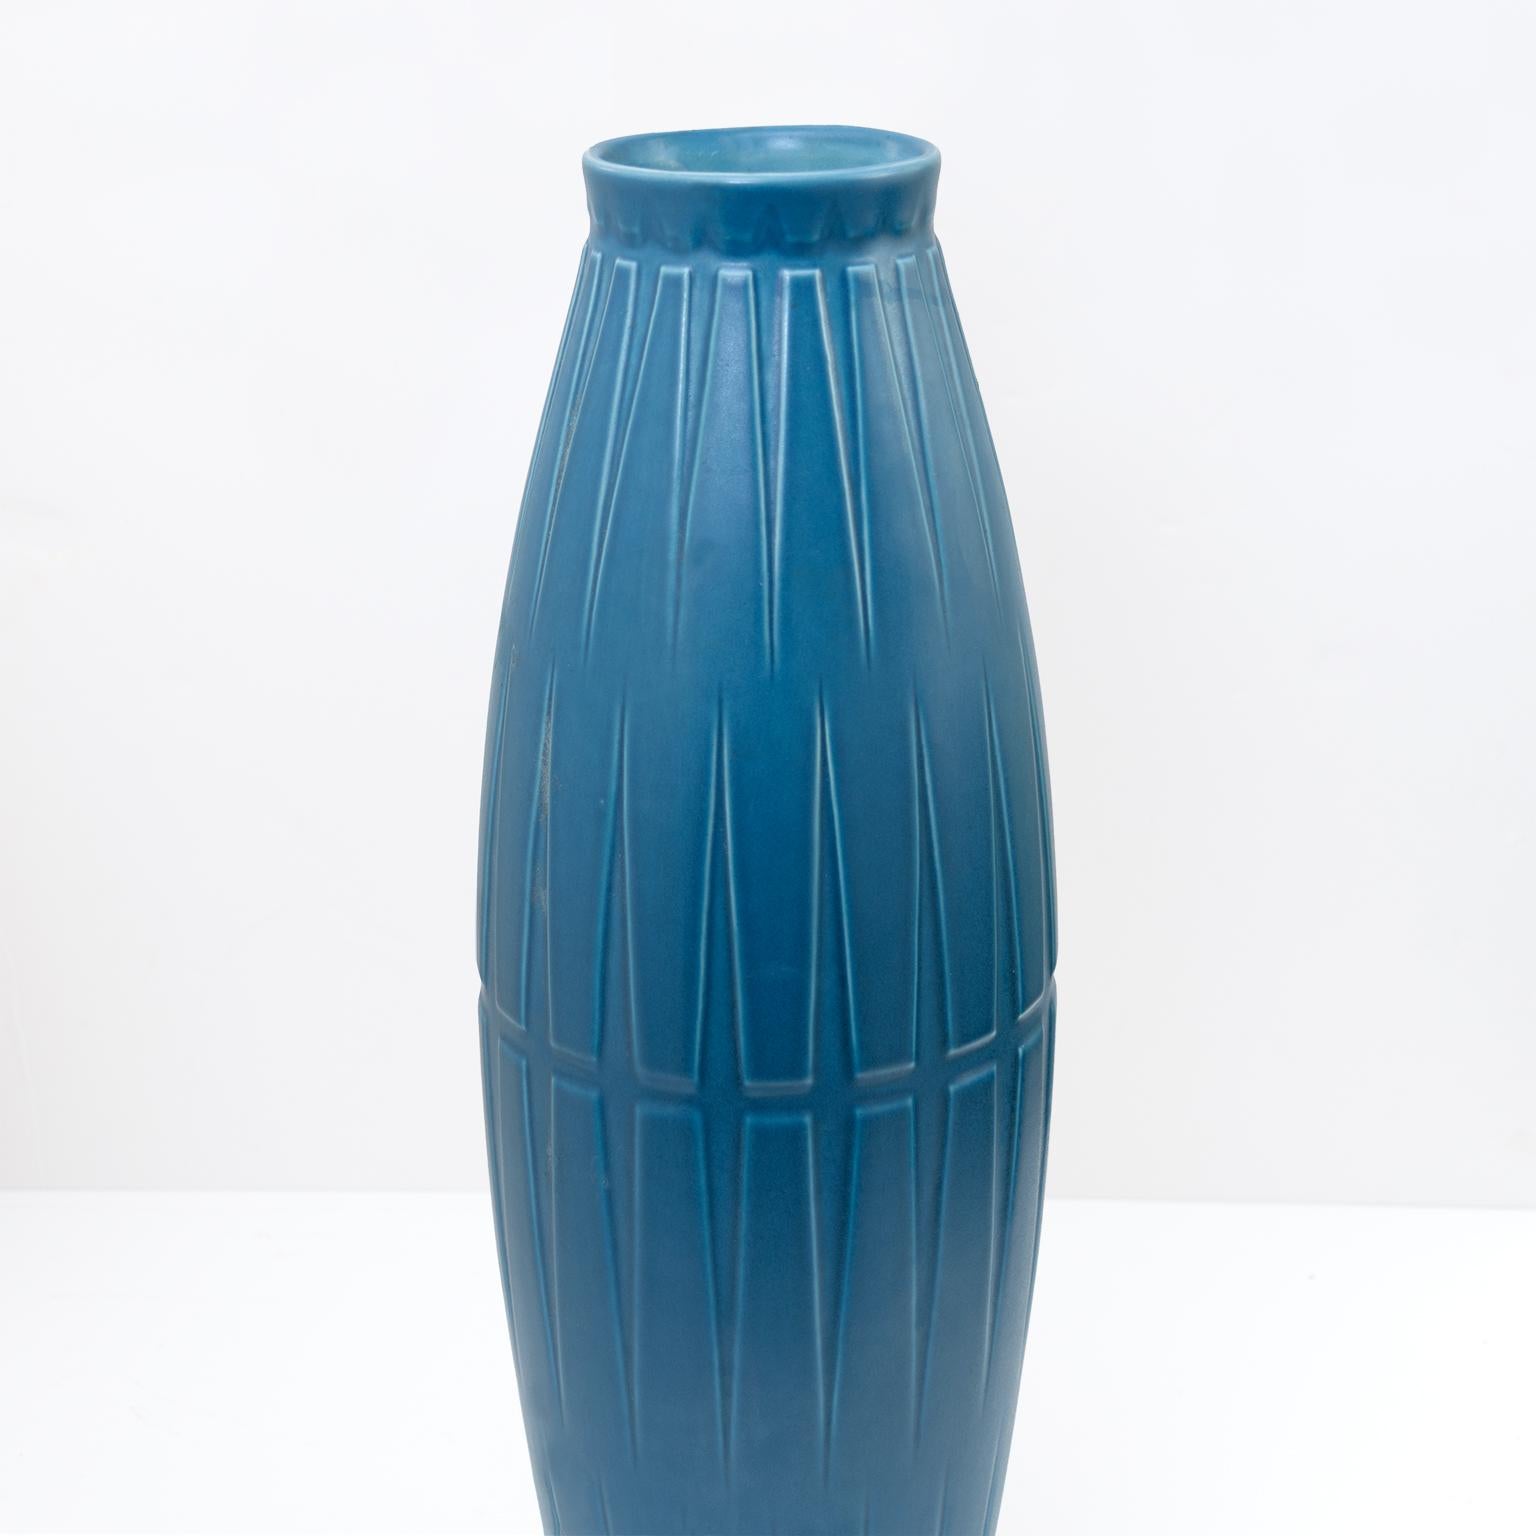 Scandinavian Modern Bo Fajans tall blue ceramic vase with geometric pattern in relief, Sweden, 1940 For Sale